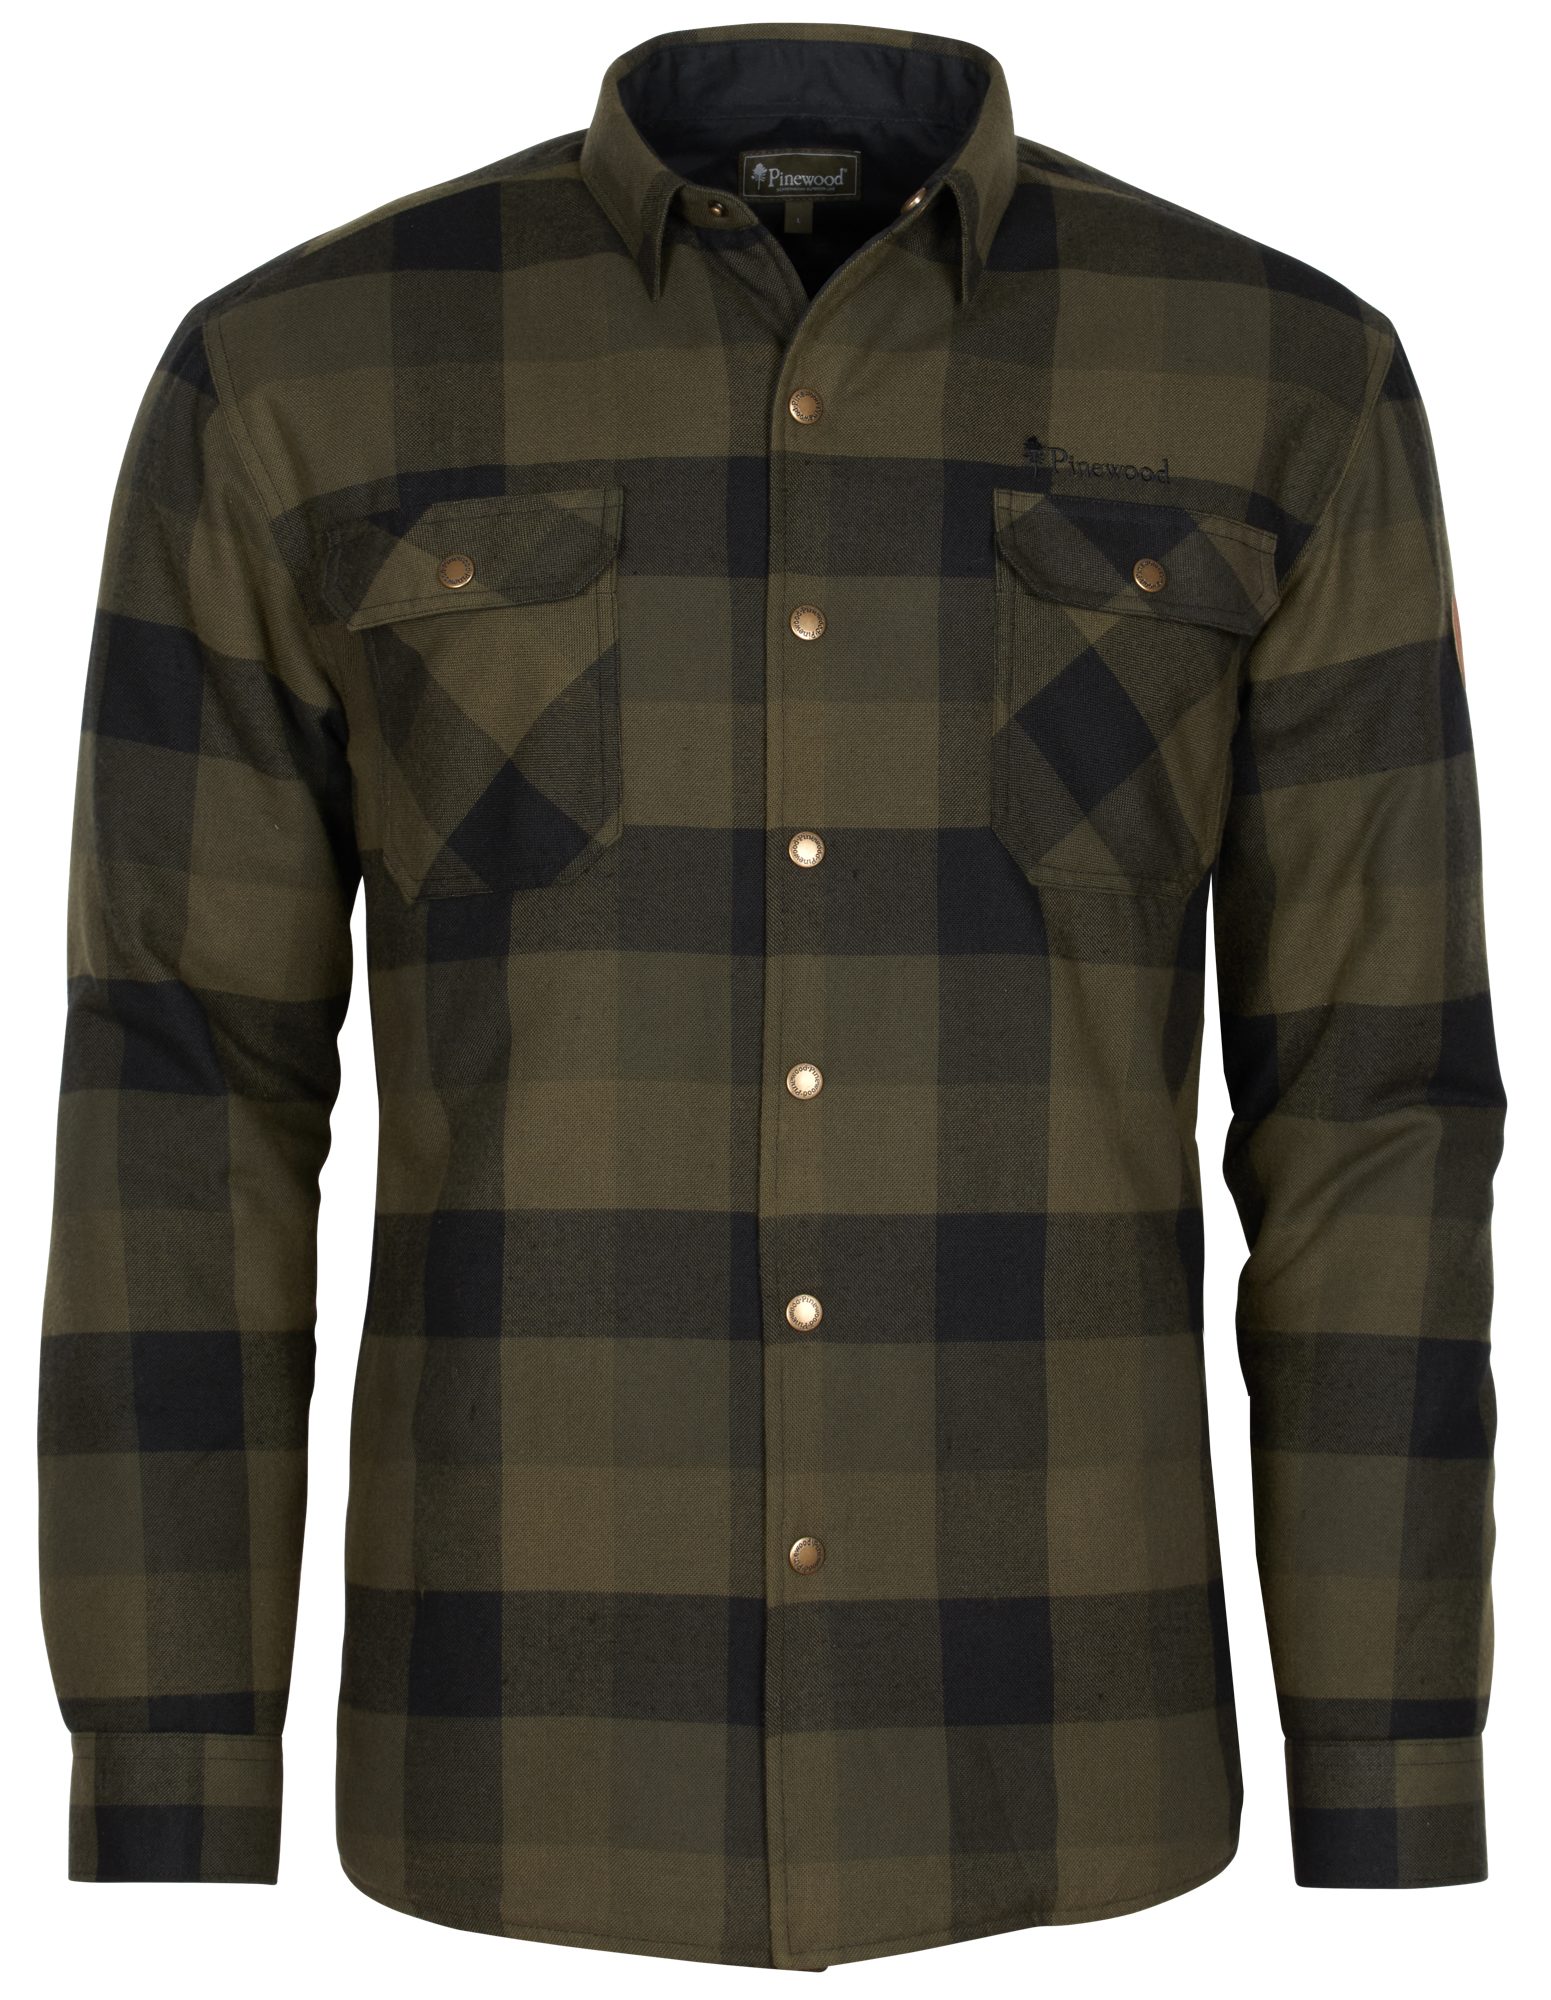 Pinewood Outdoorhemd CANADA CLASSIC 2.0 CS Herren-Hemd, Funktionshemd, Hemdjacke auch in Großen Größen